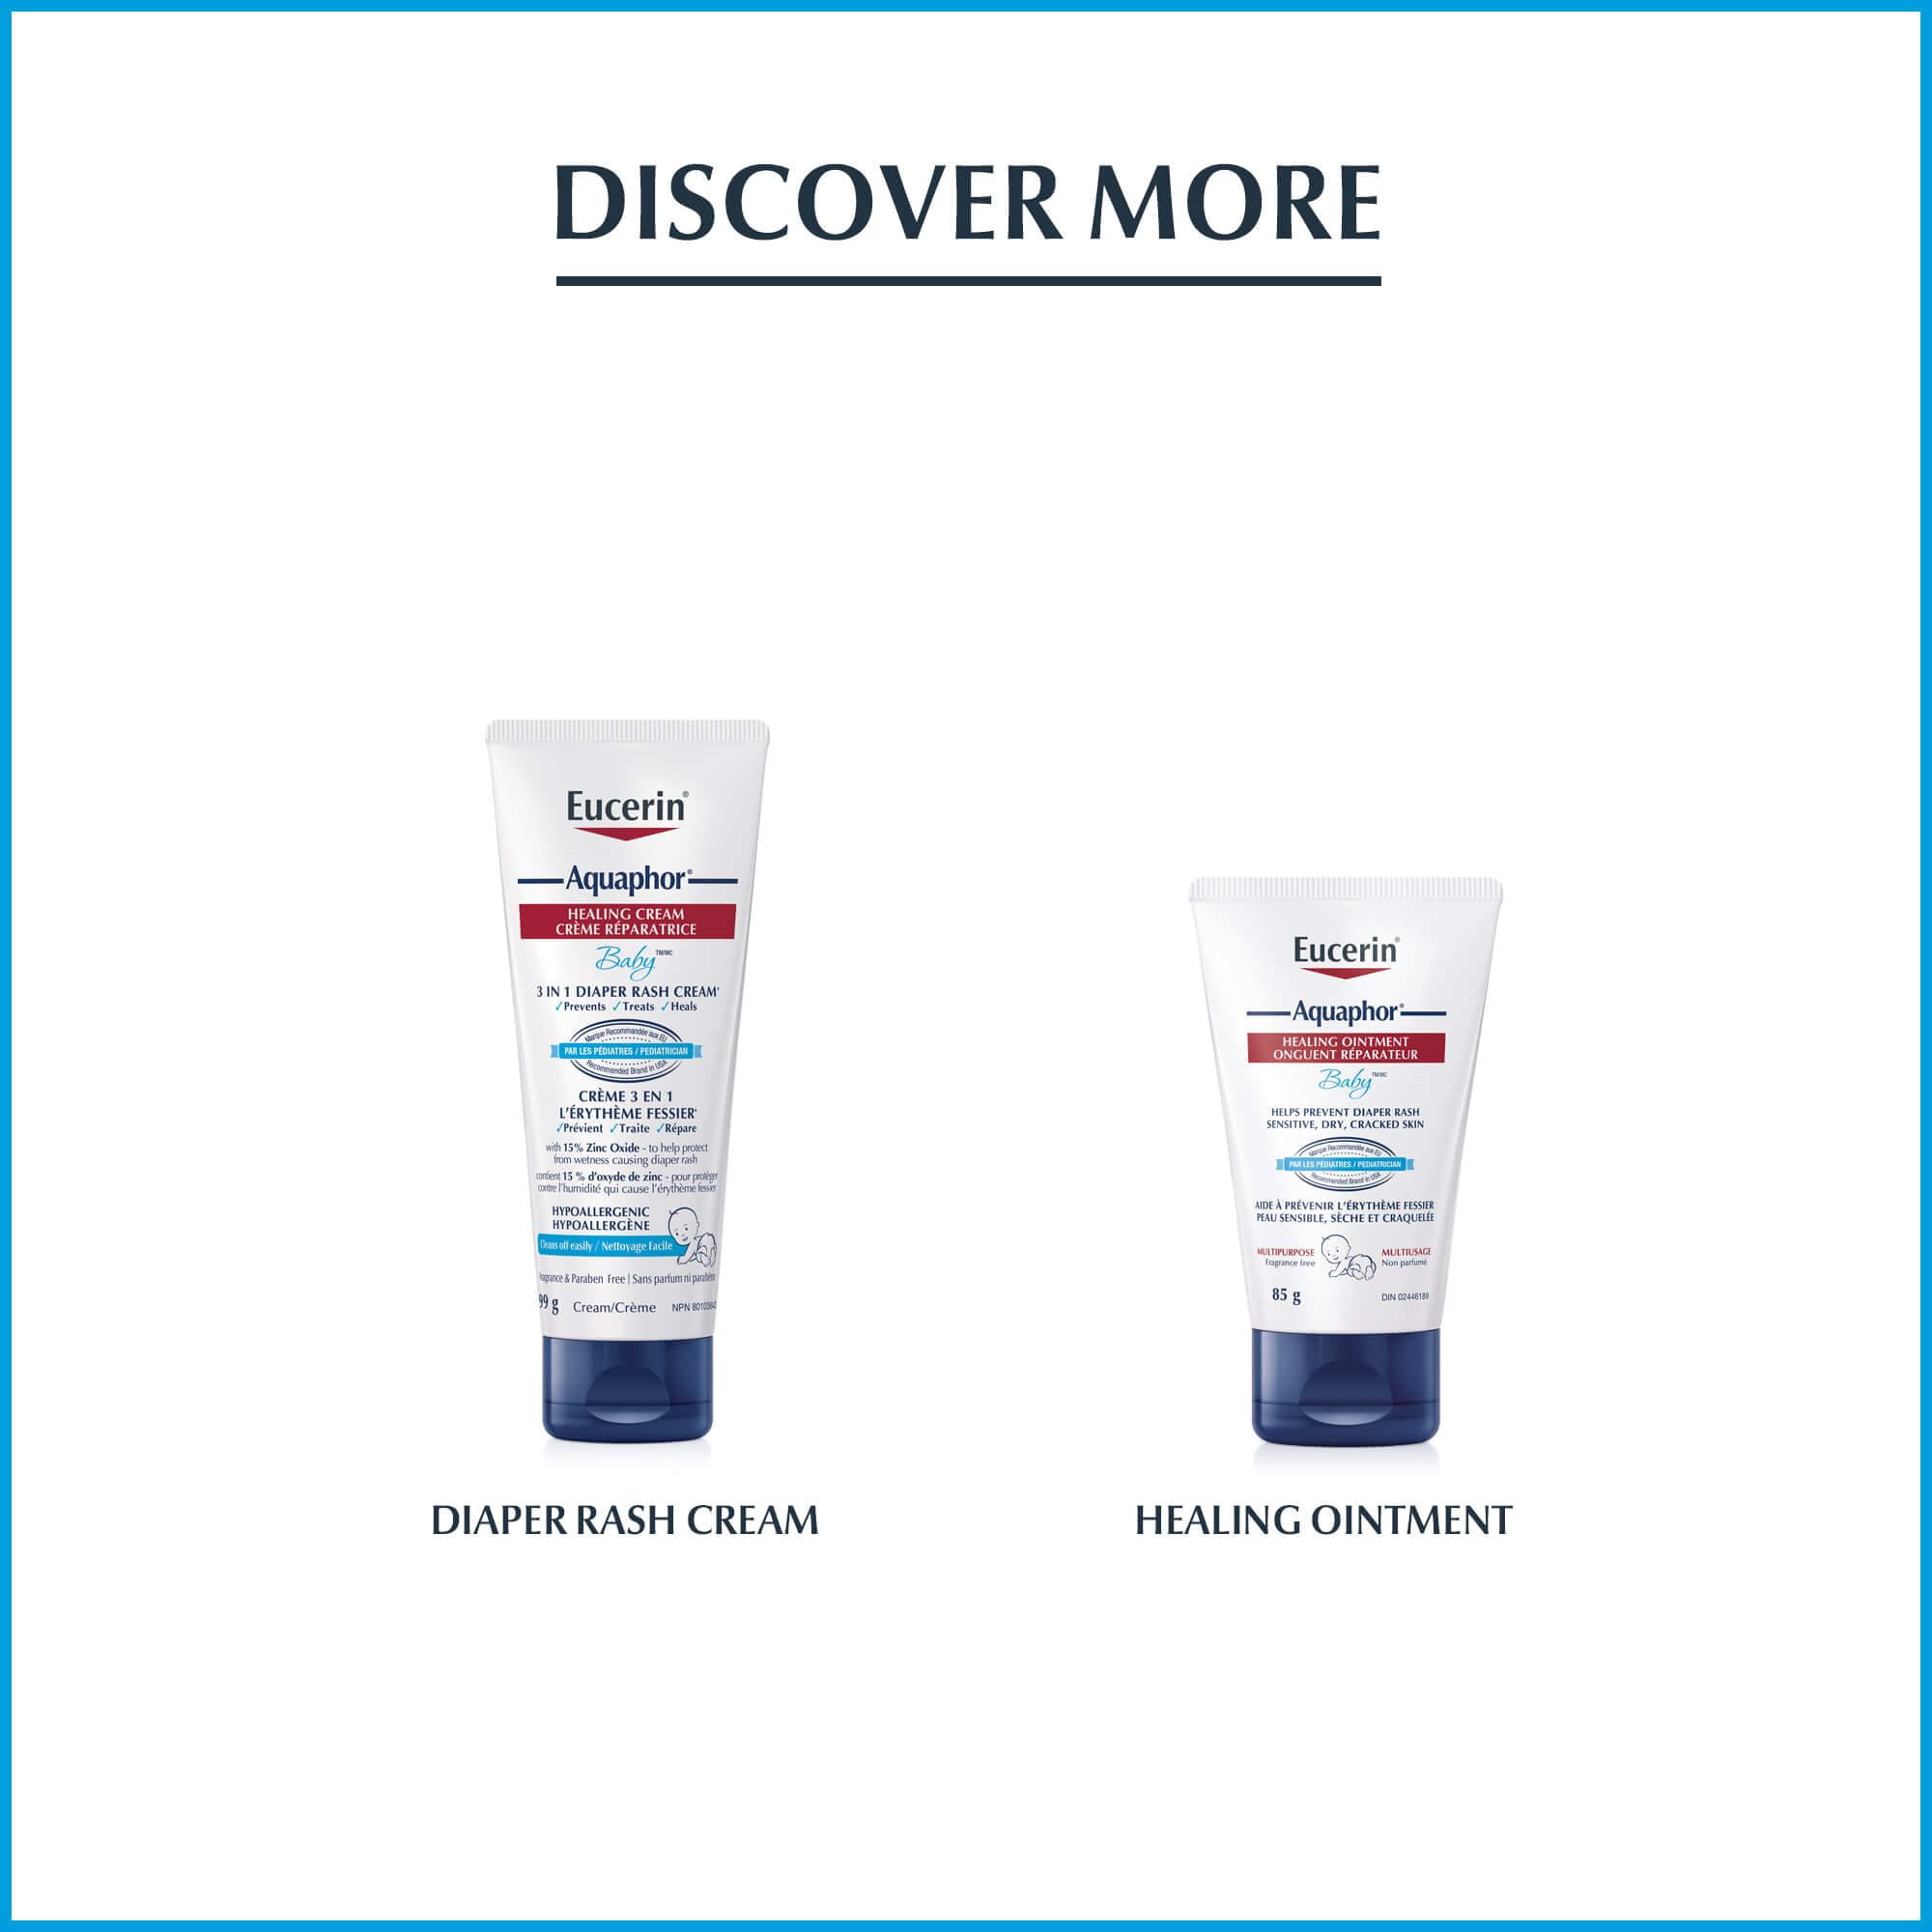 View of Eucerin Aquaphor healing cream size 99g and Eucerin Aquaphor healing ointment size 85g against a white background.